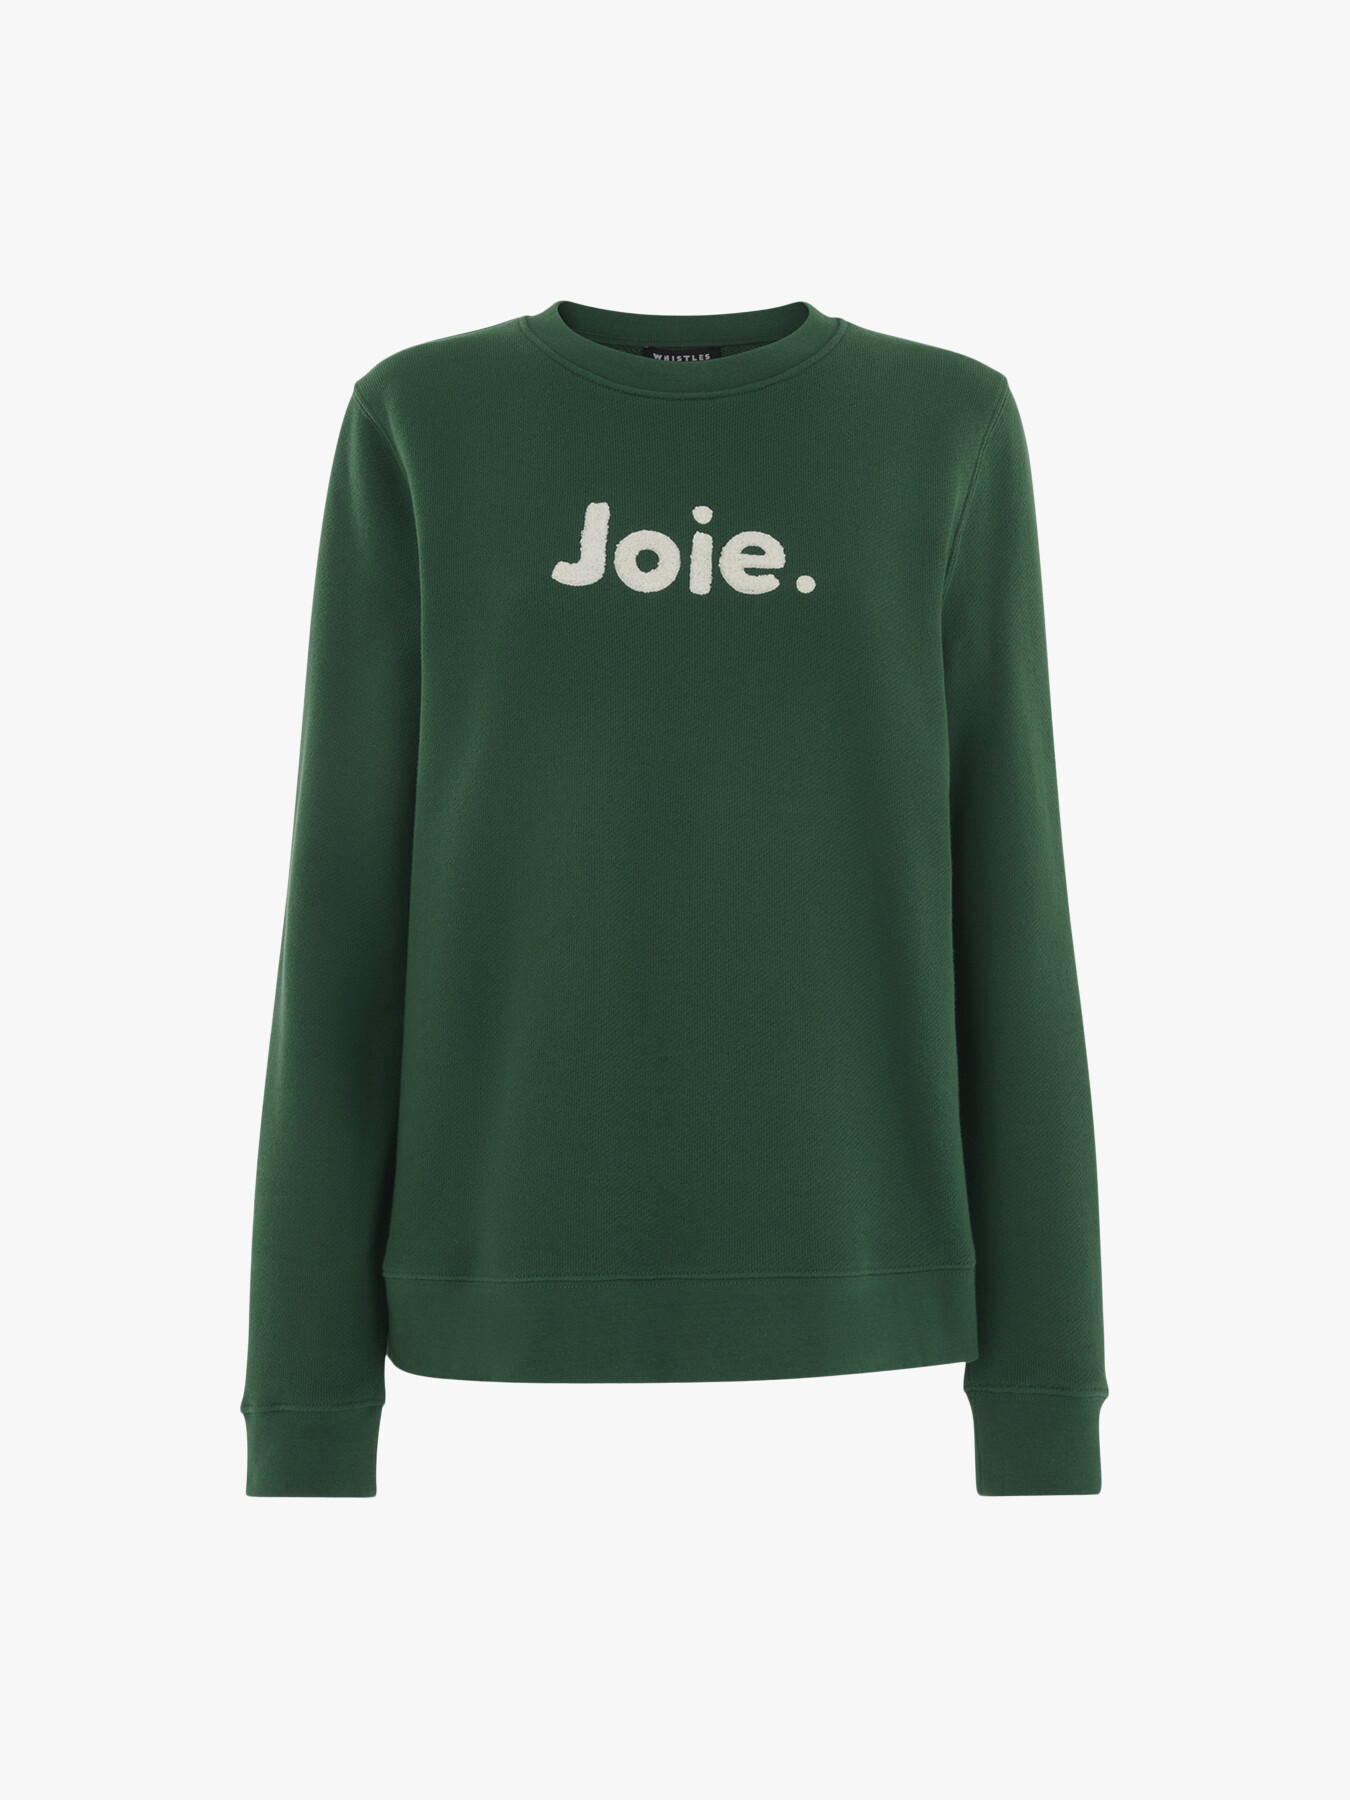 Whistles Joie Logo Sweatshirt In Dark Green